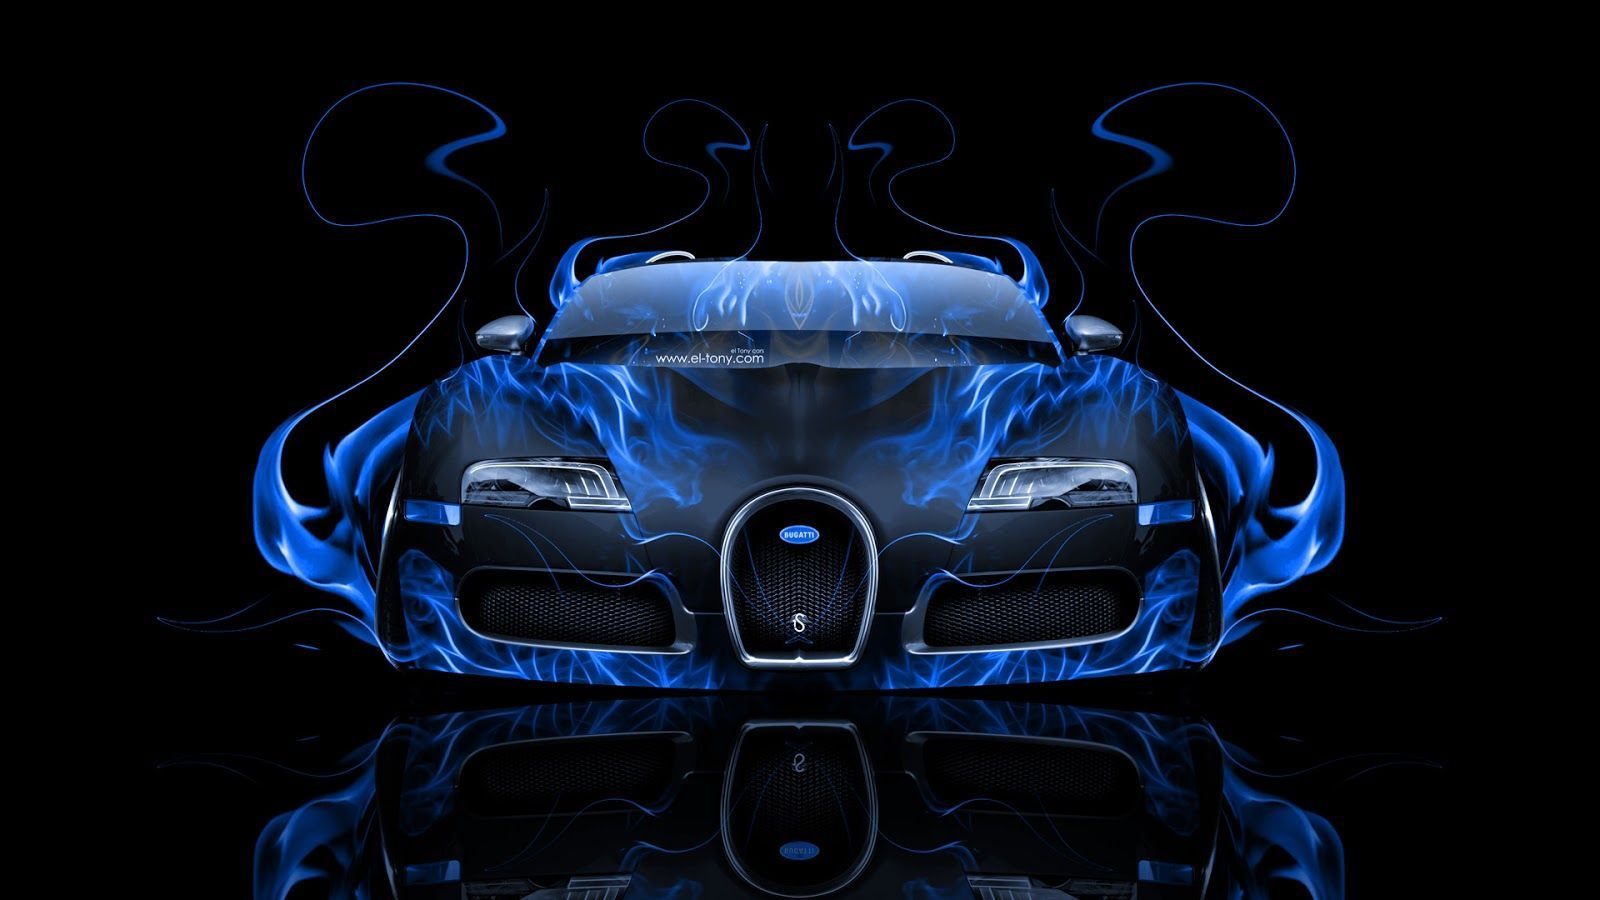 50 Bugatti Veyron Wallpaper Hd For Laptop  Bugatti Car Hd Wallpapers 1080p   1520x819 Wallpaper  teahubio